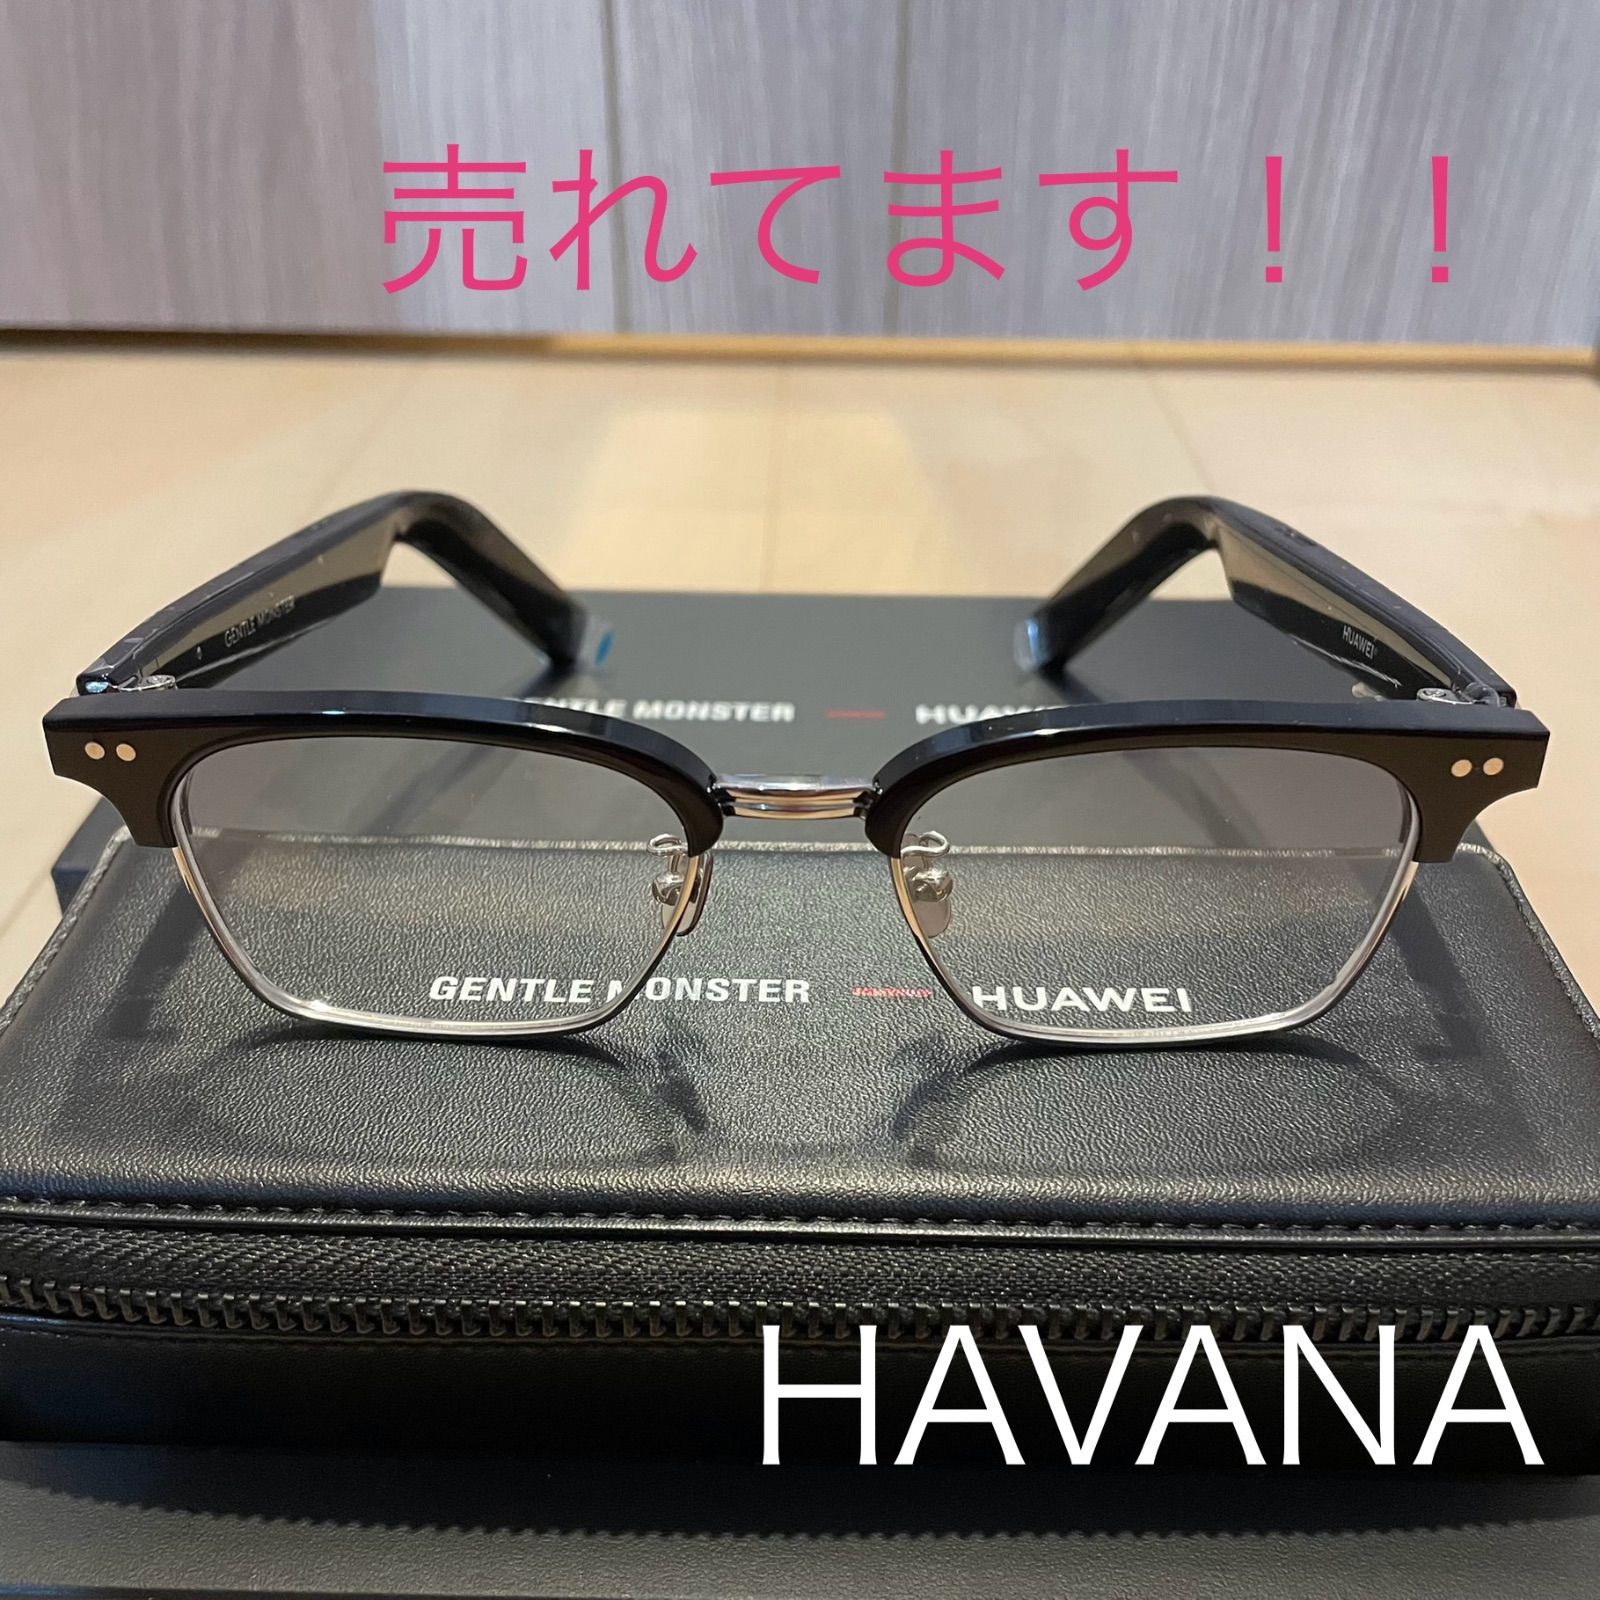 左s-425HUAWEI X GENTLE MONSTER Eyewear2 havana